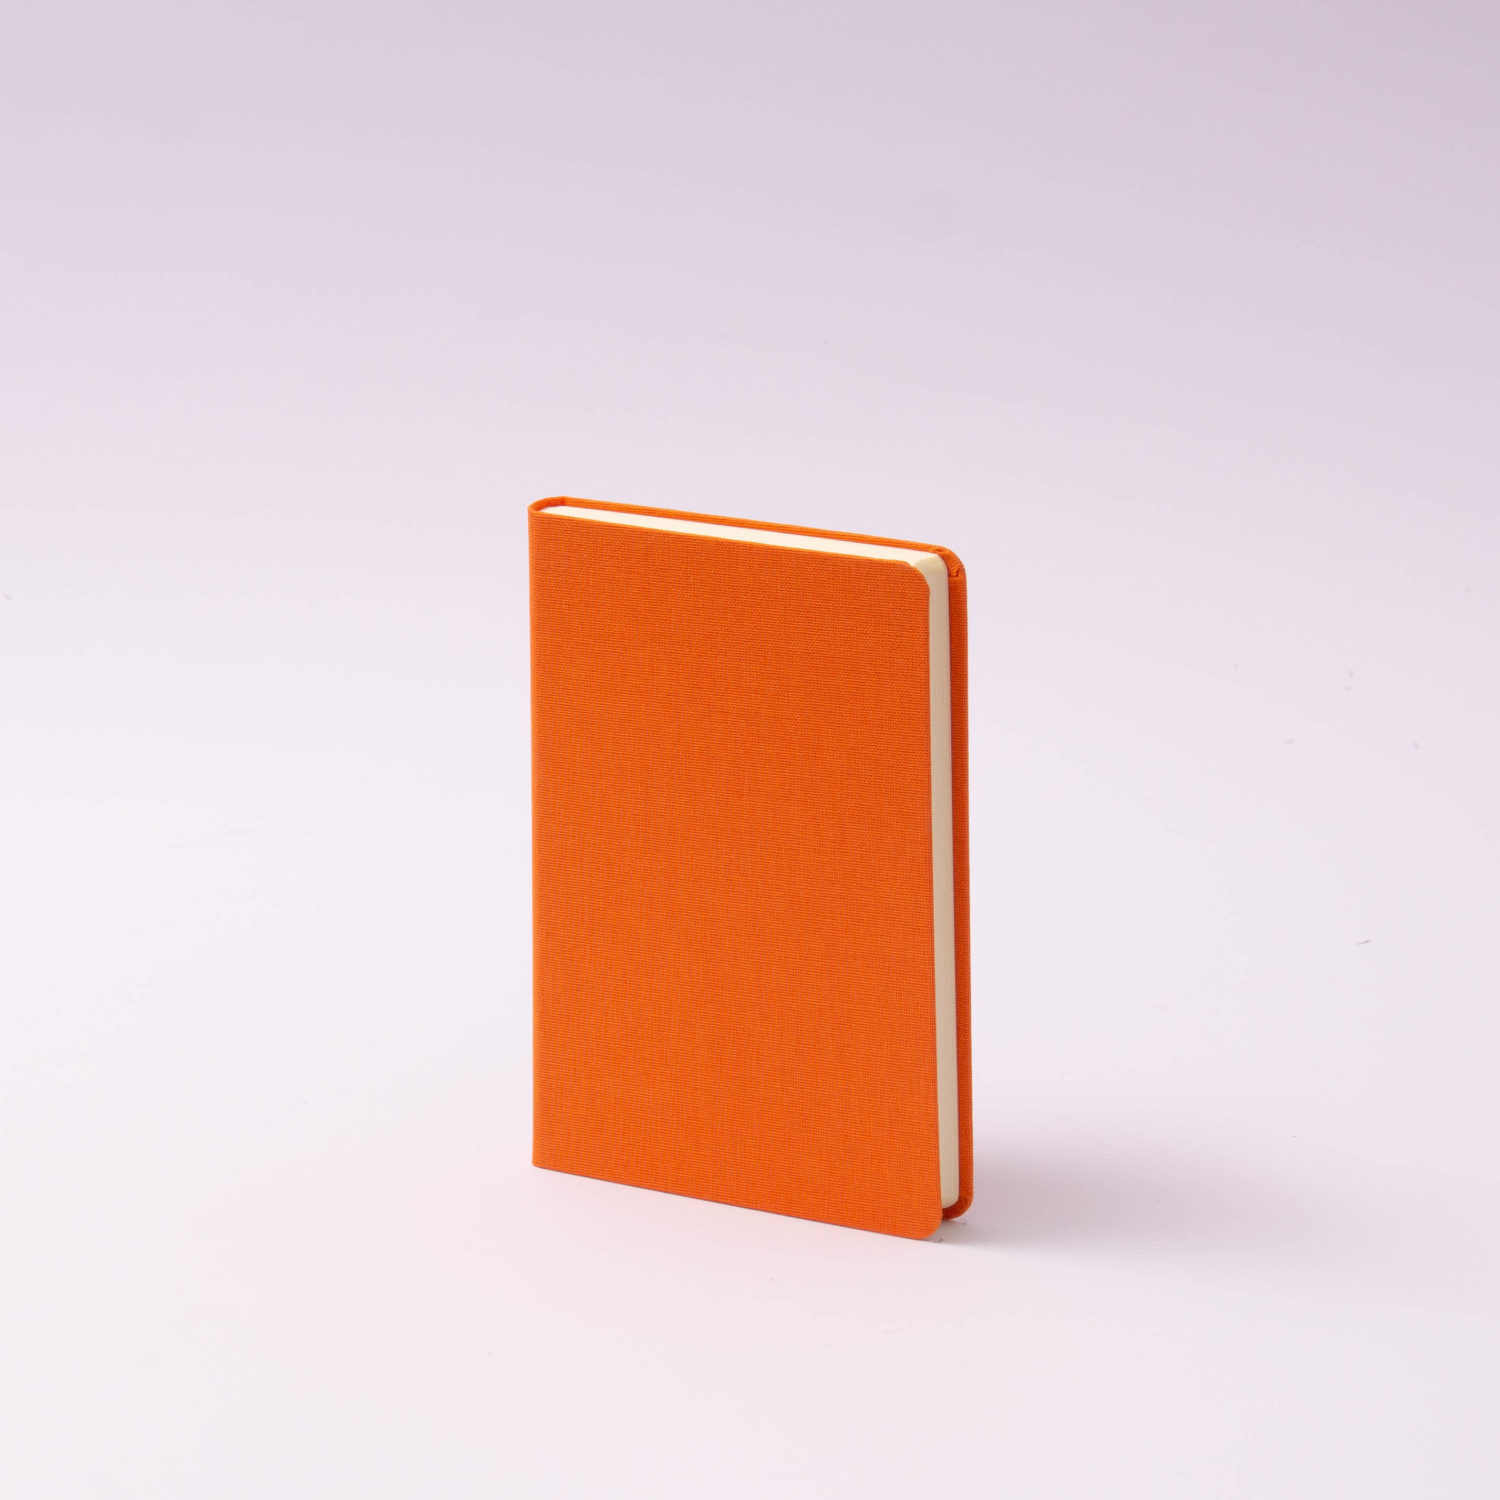 Bindewerk Books, Albums - Linen Flex-Cover Notebooks #BWLNF